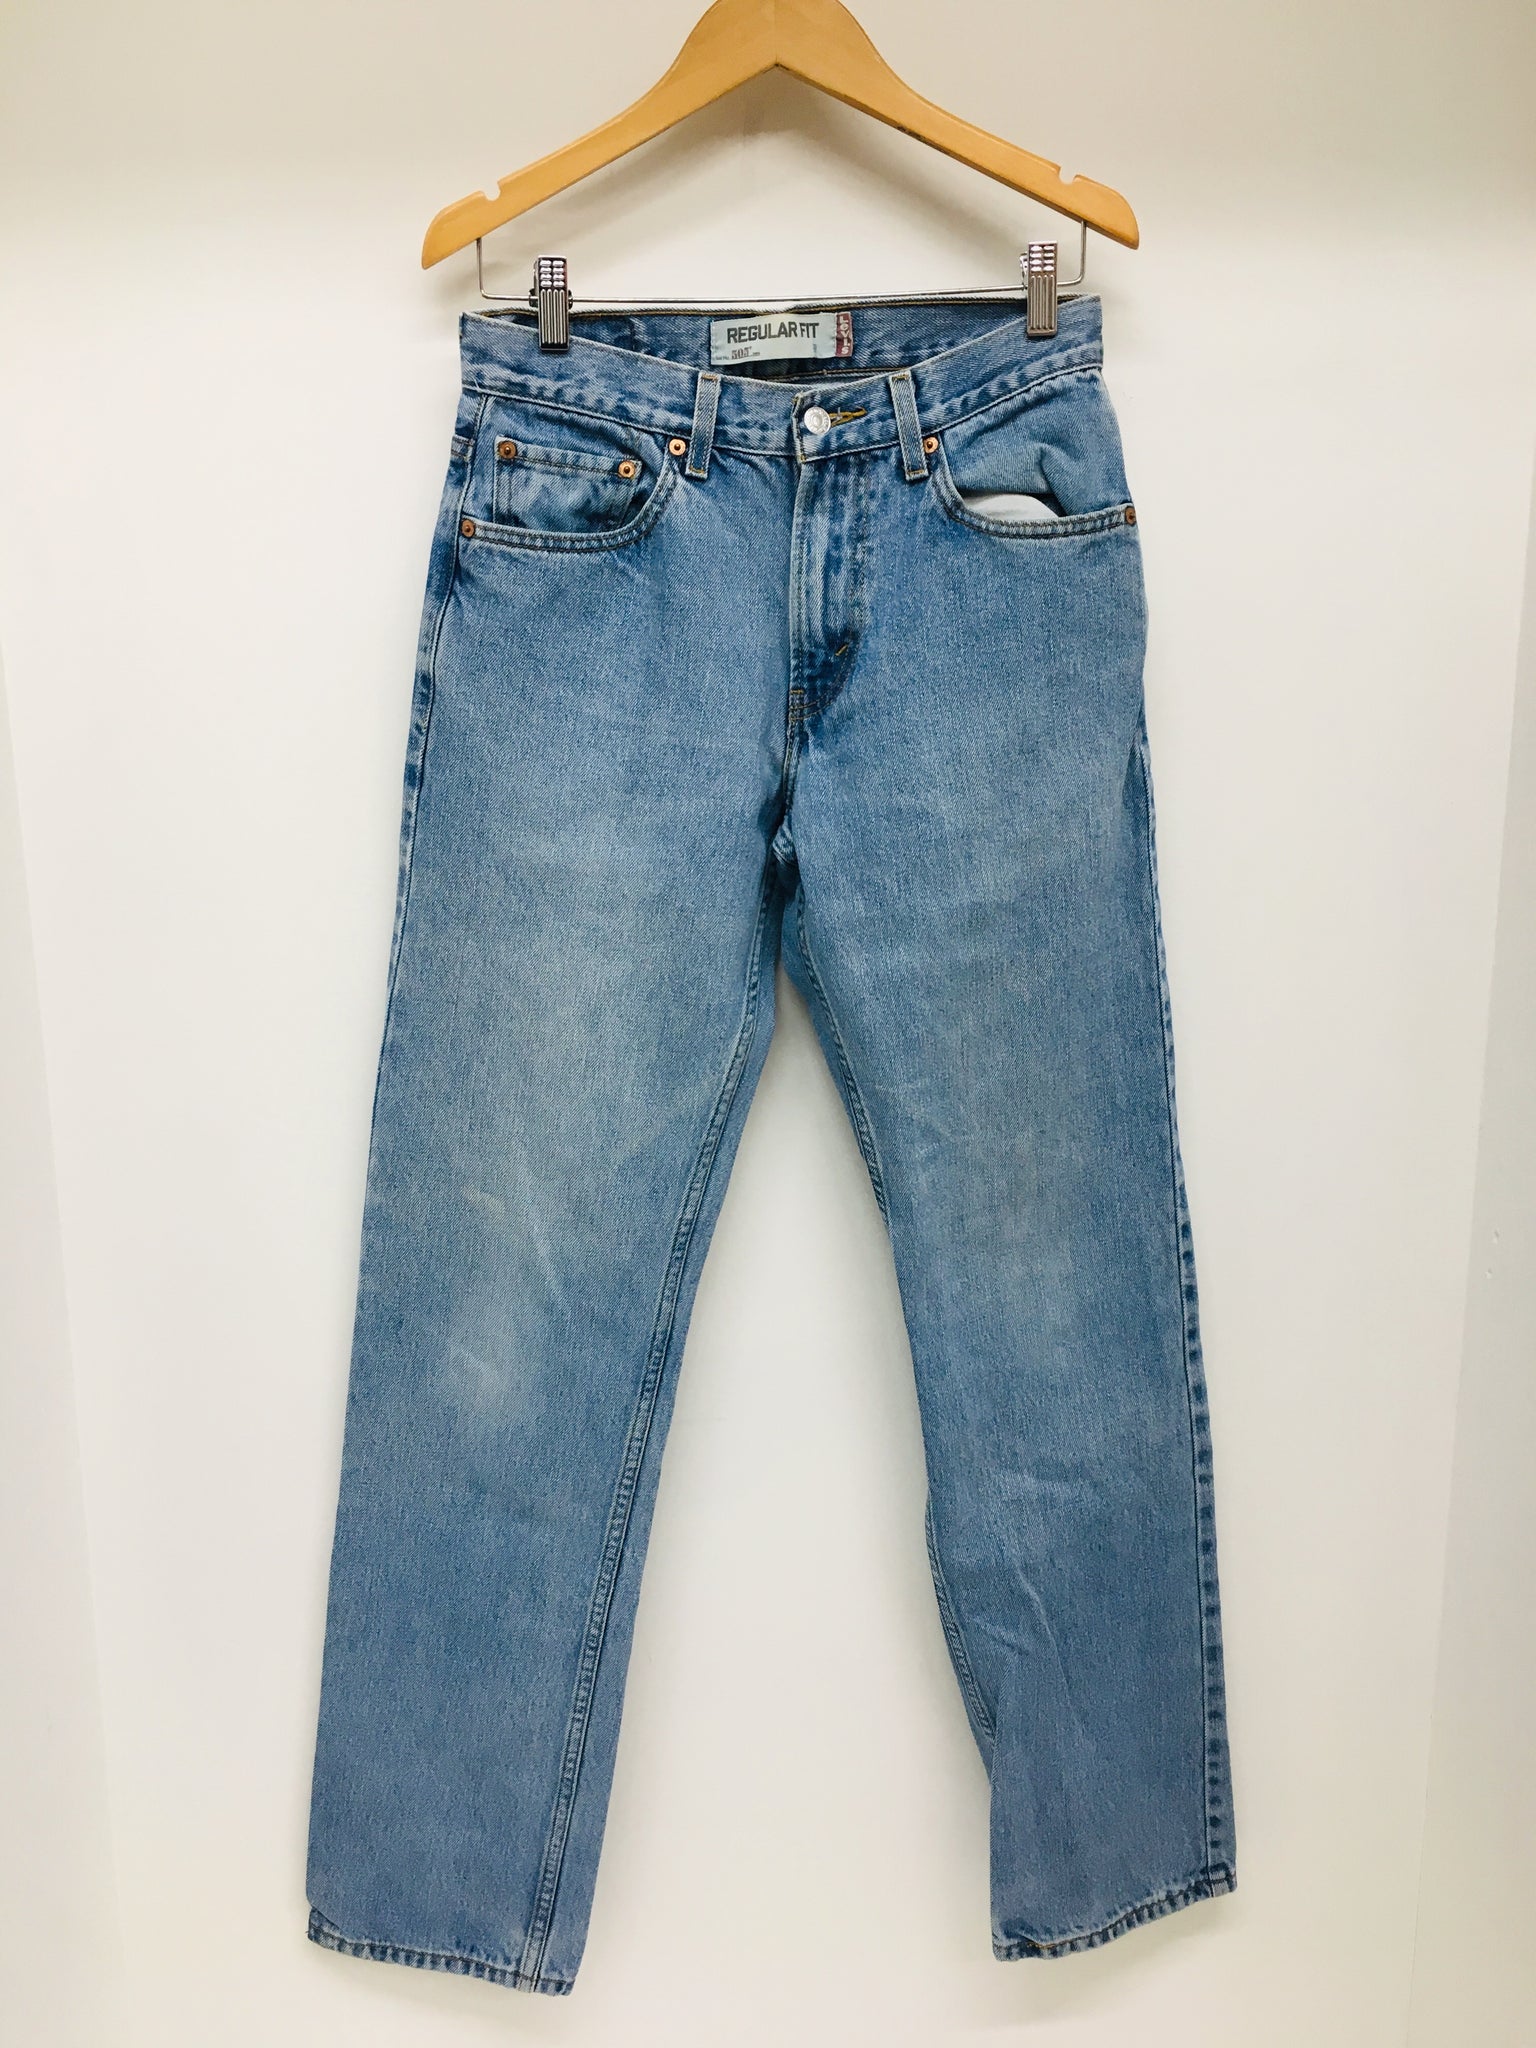 29x34 jeans size